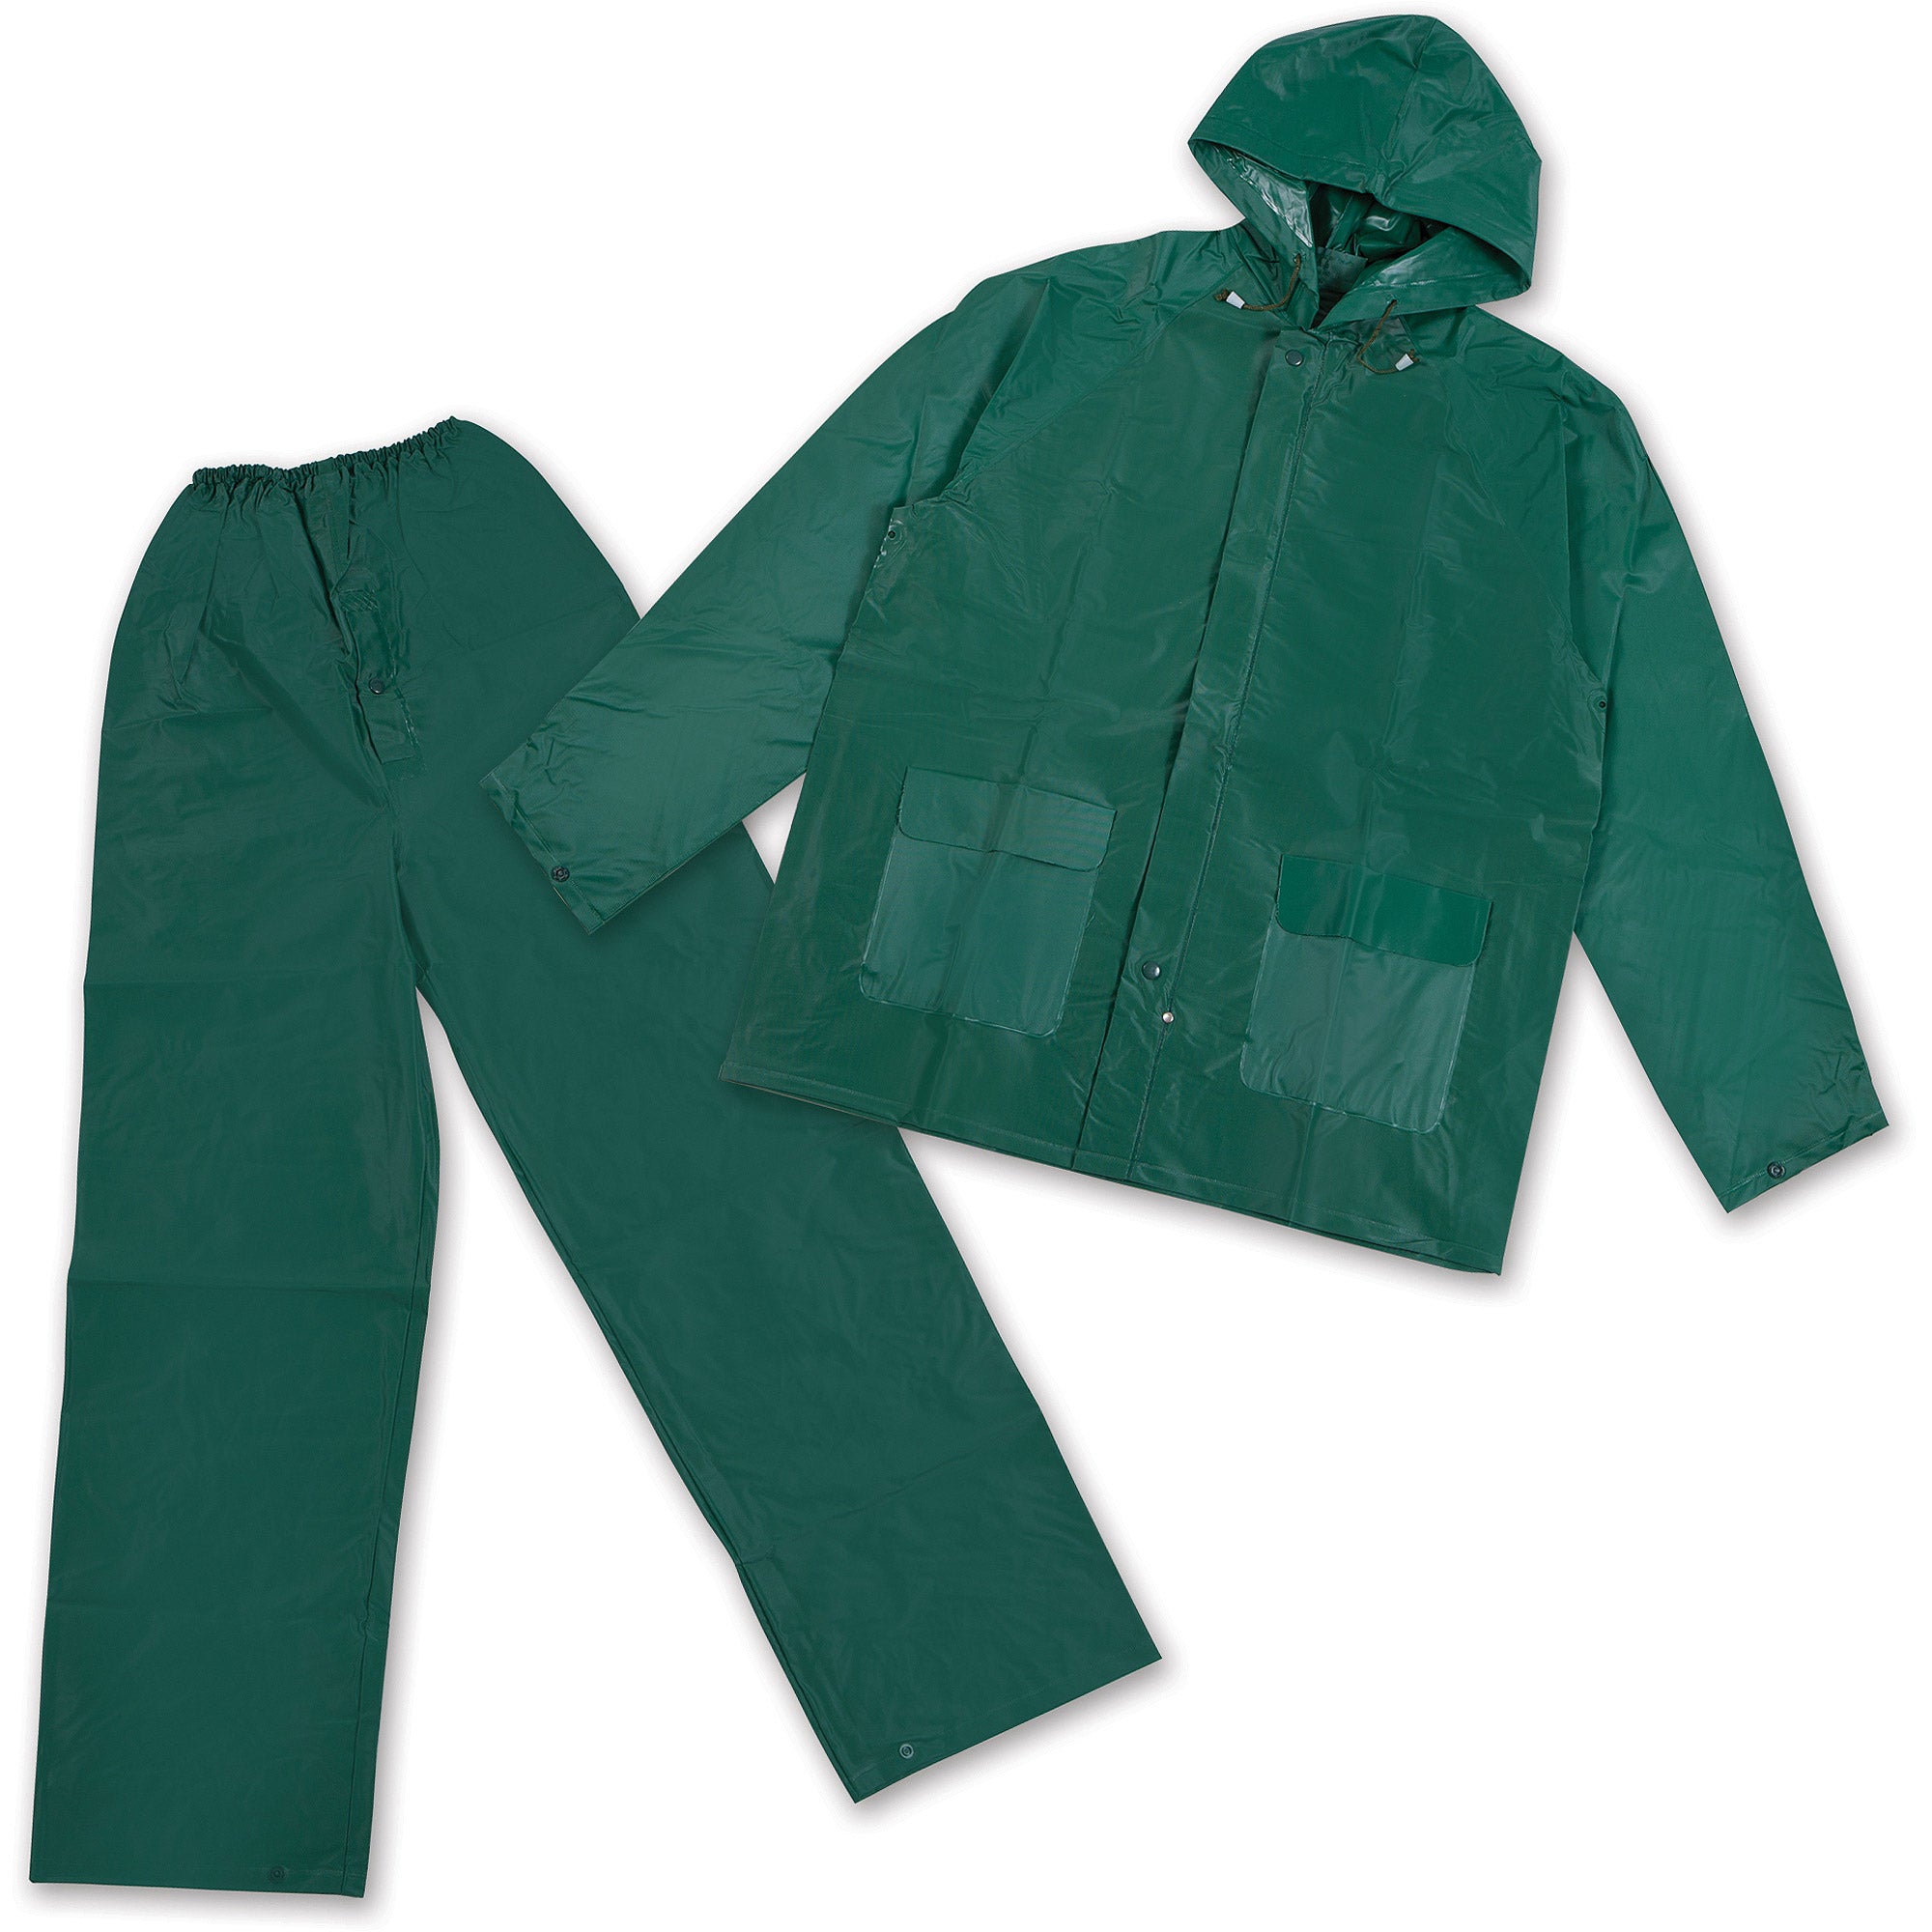 Mens Vinyl Rainsuit - Green - XL